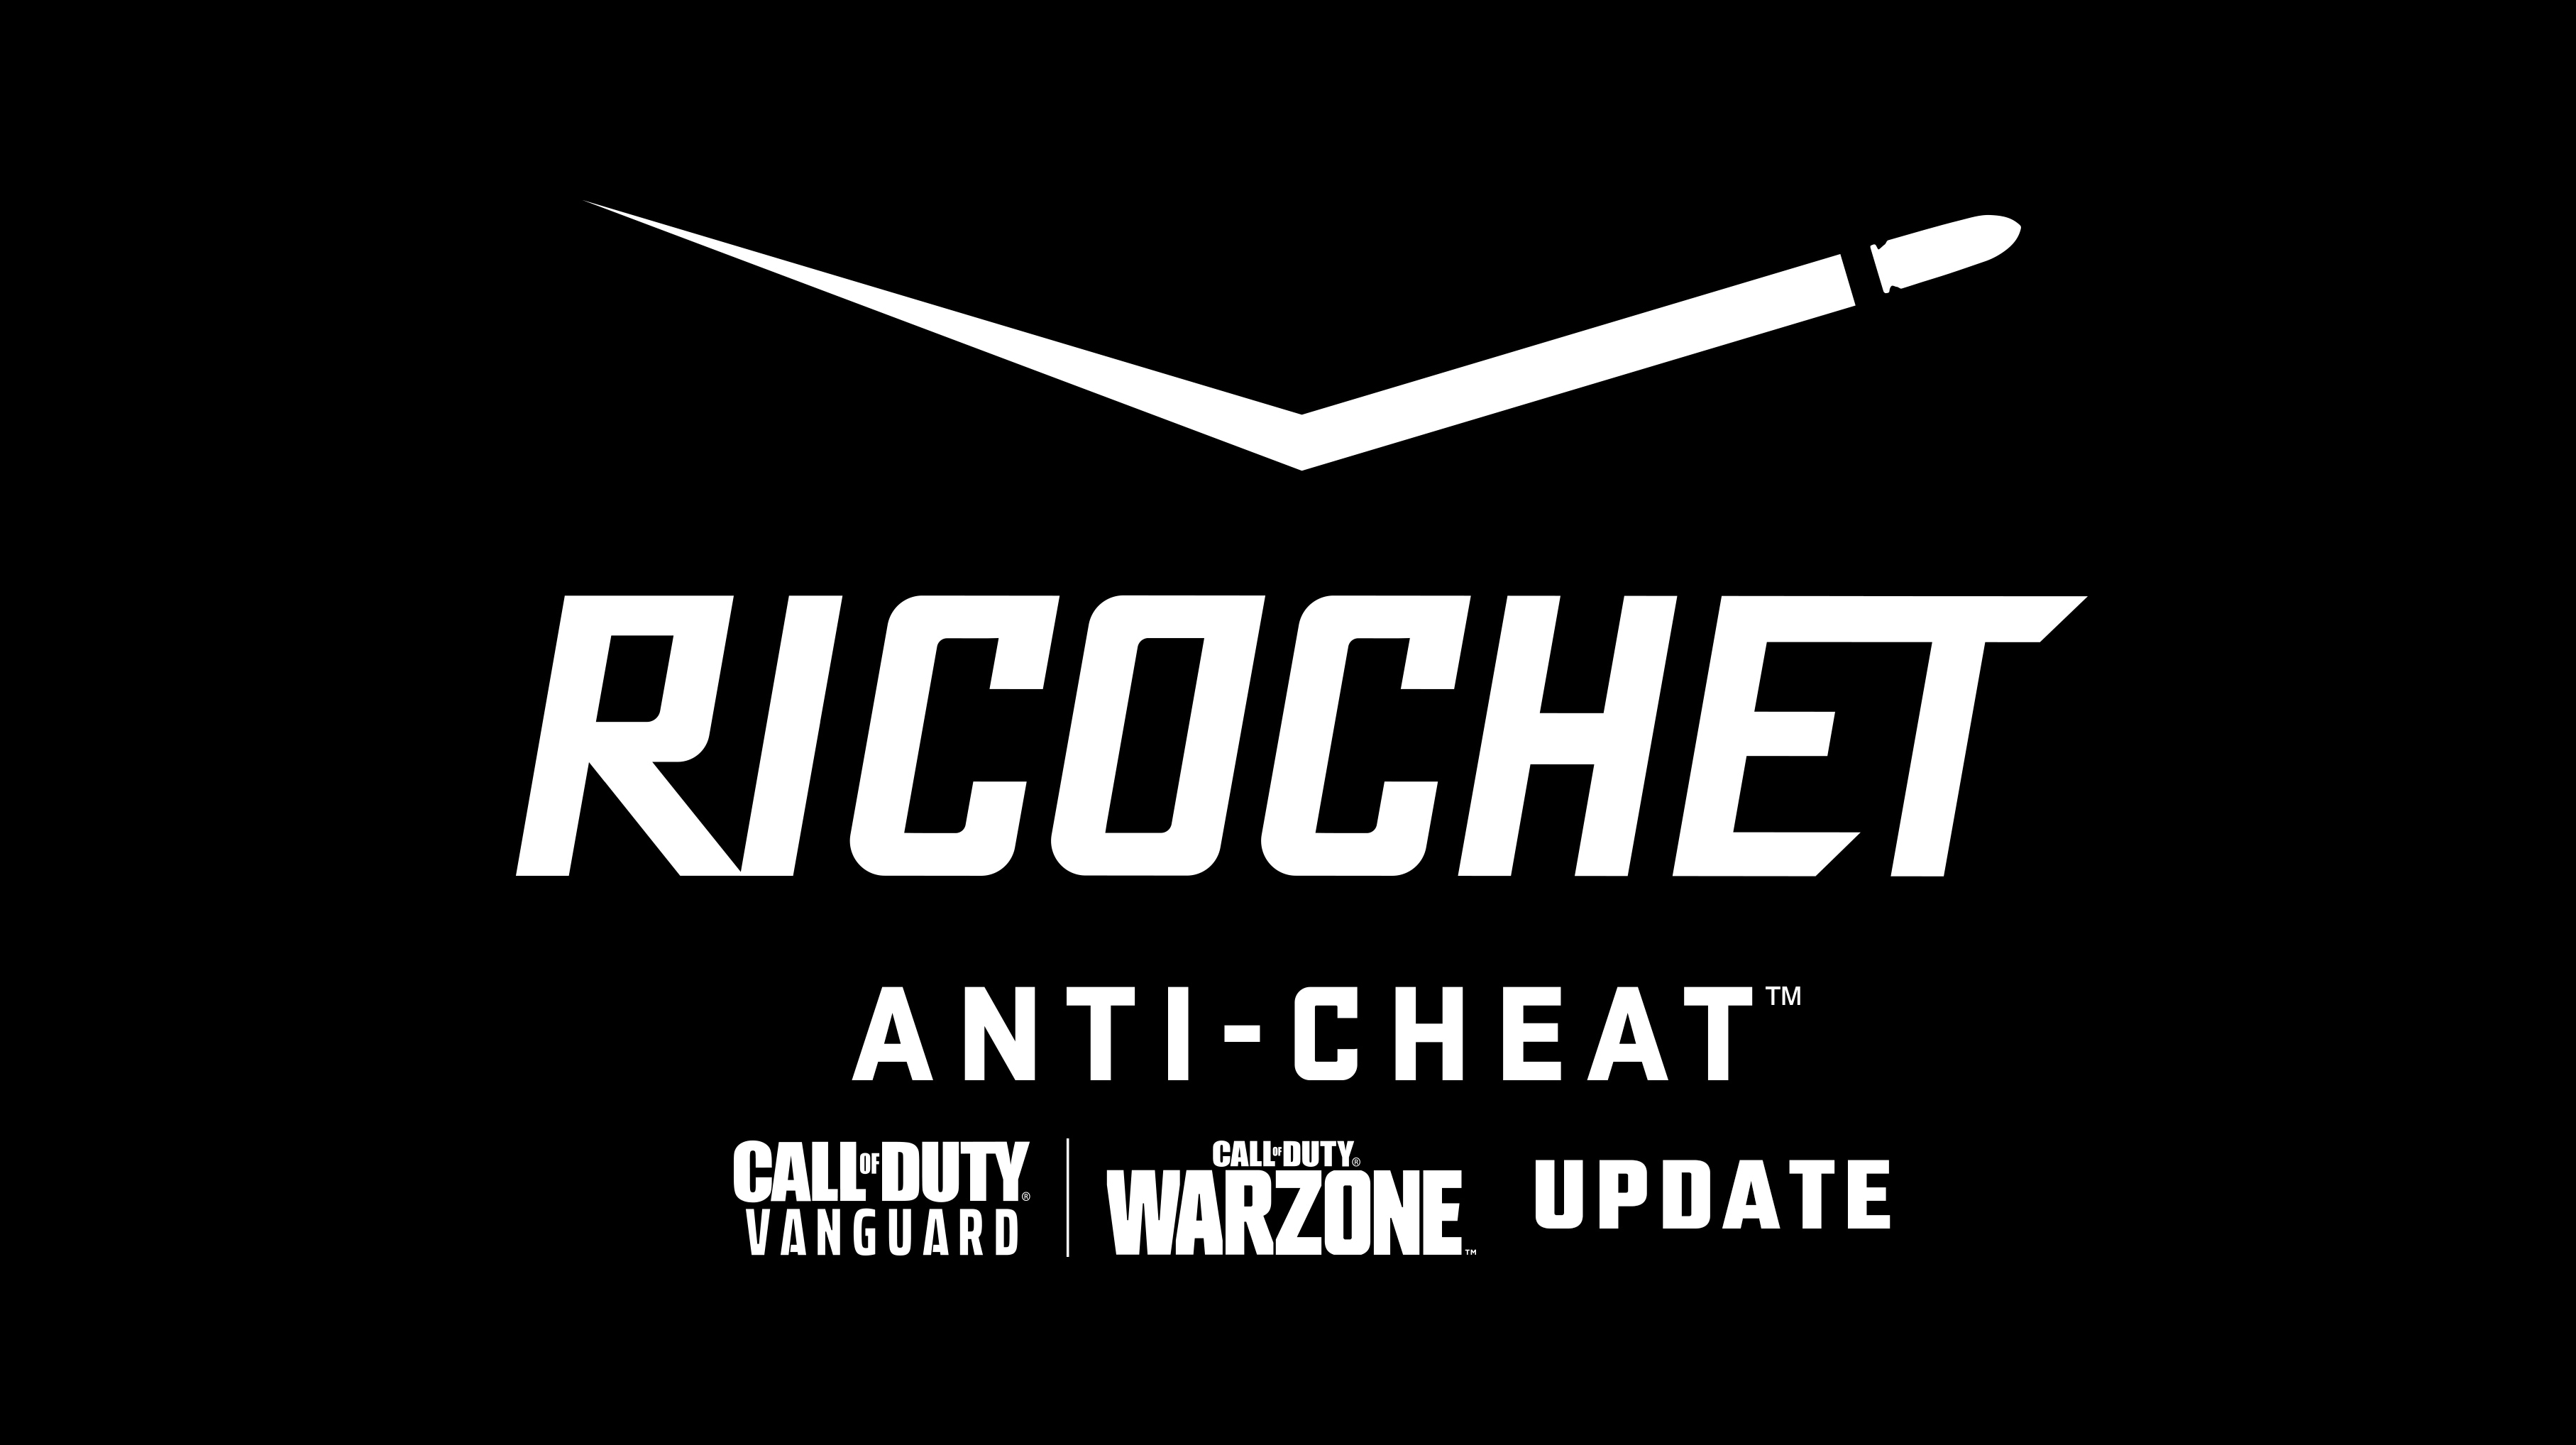 RICOCHET Anti-Cheat progress report – Vanguard update